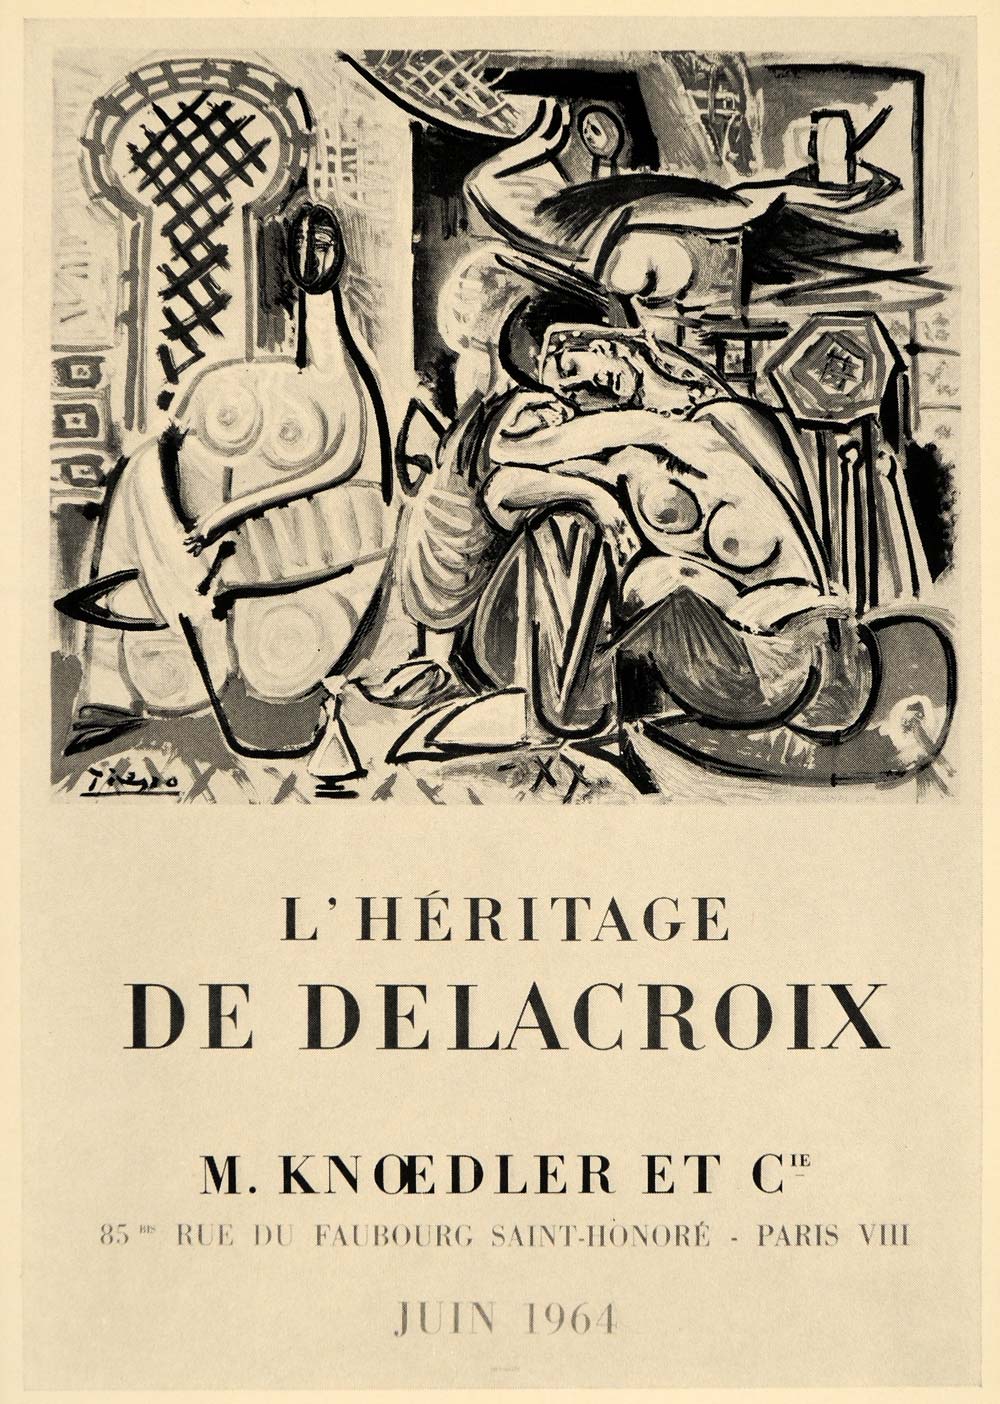 1971 Print Picasso Delacroix Galerie M. Knoedler Poster - ORIGINAL PIC3